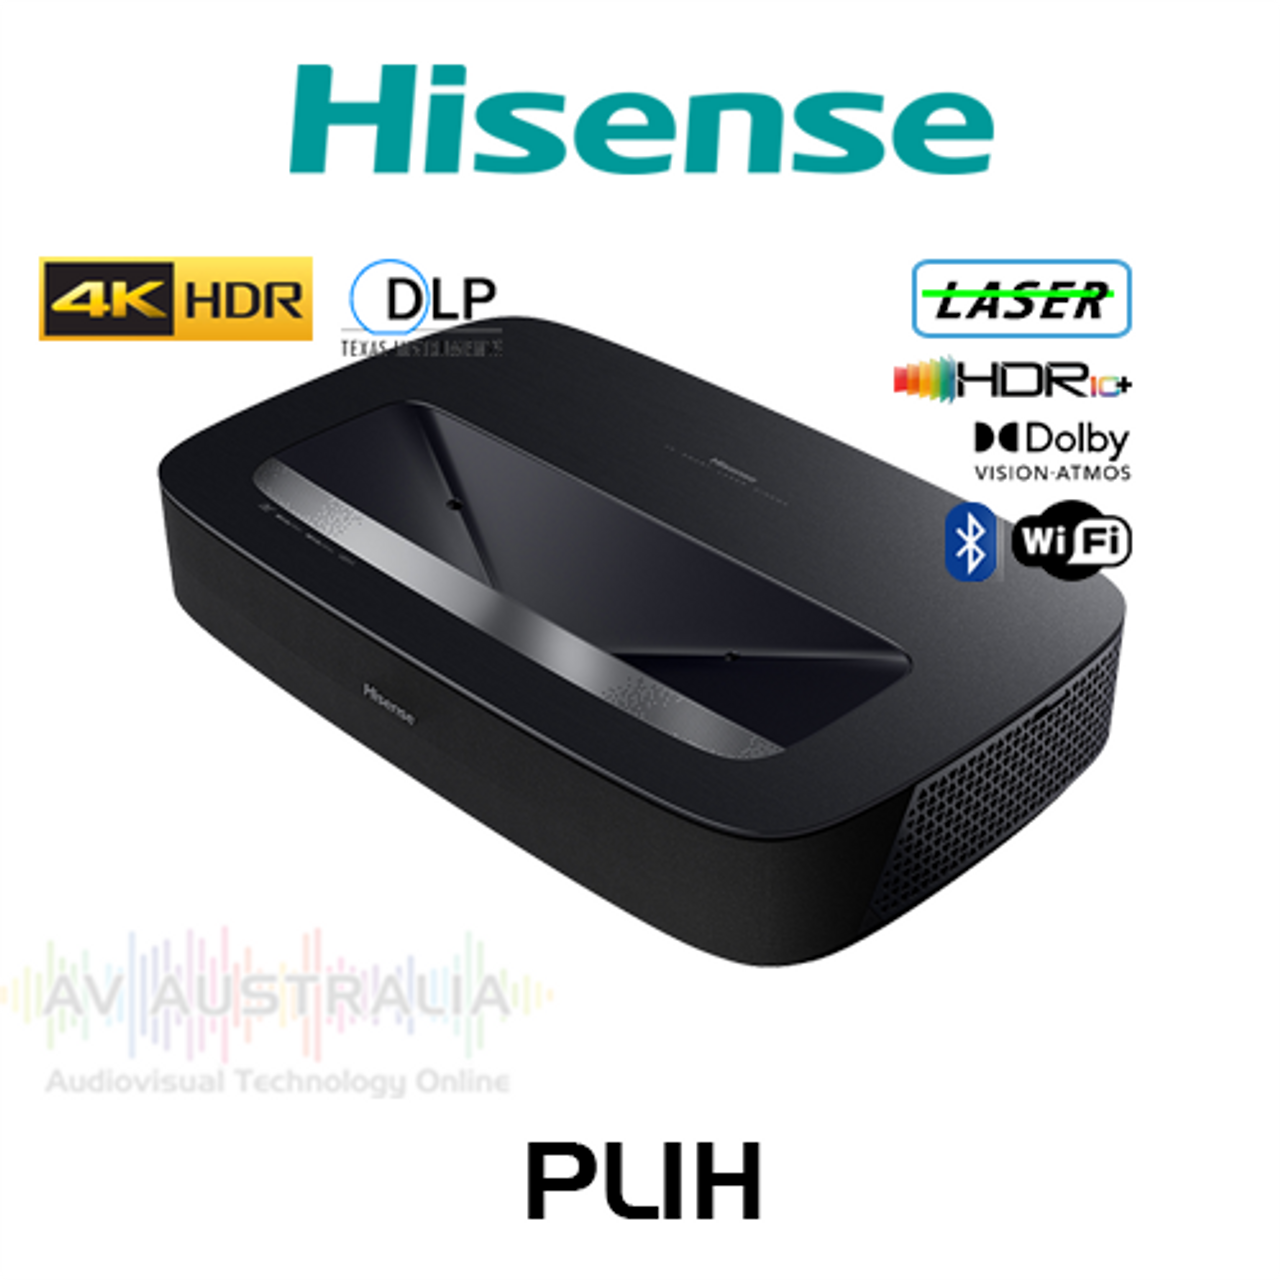 Hisense PL1H 4K Smart Ultra Short Throw DLP Laser Projector